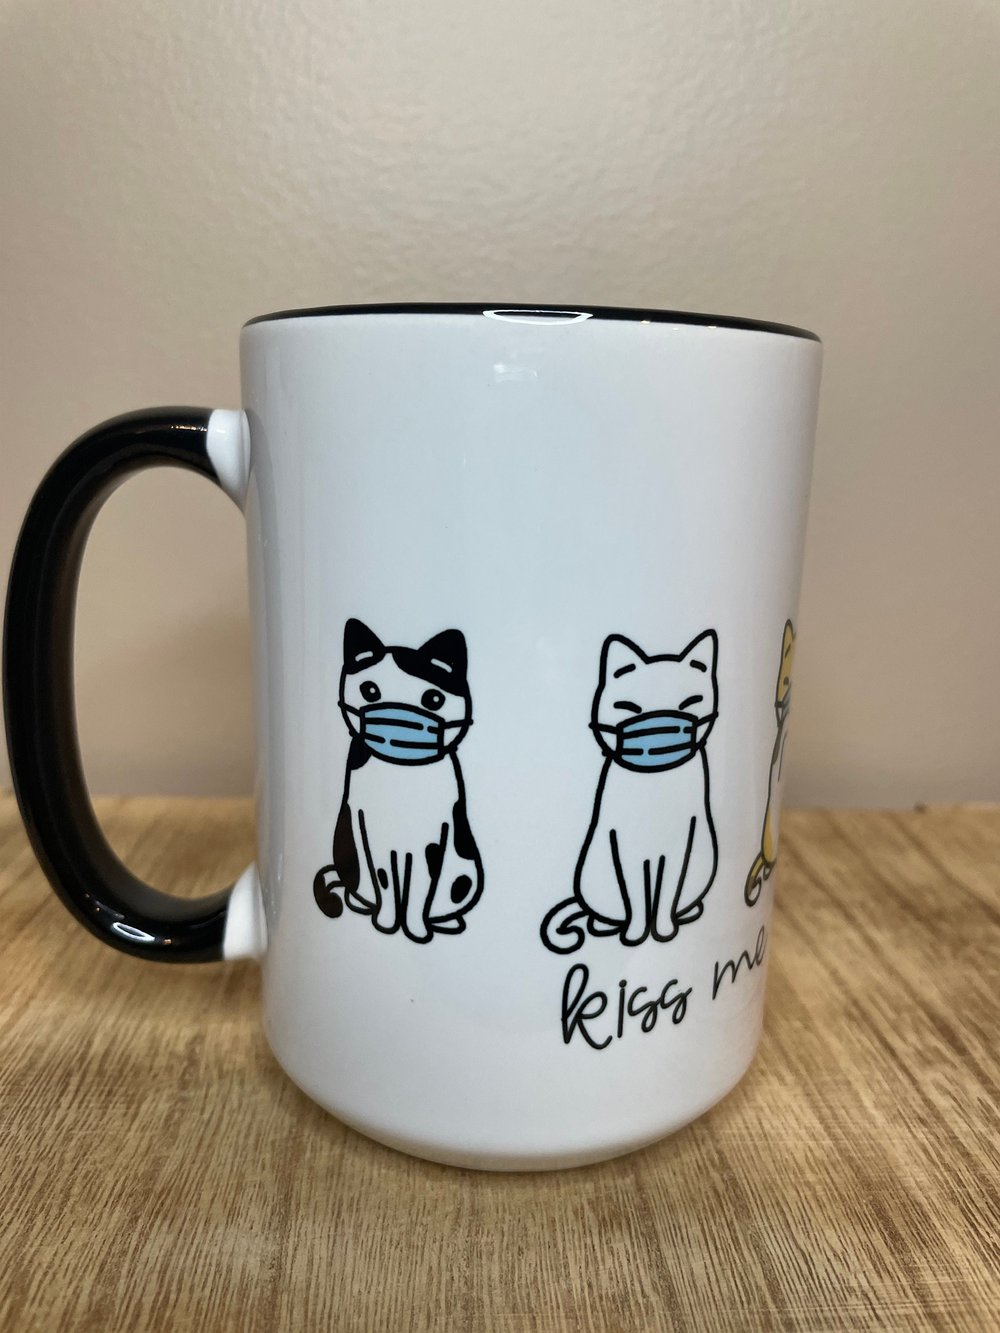 Cat Dishwasher Safe Microwavable Ceramic Coffee Mug 15 oz., 1